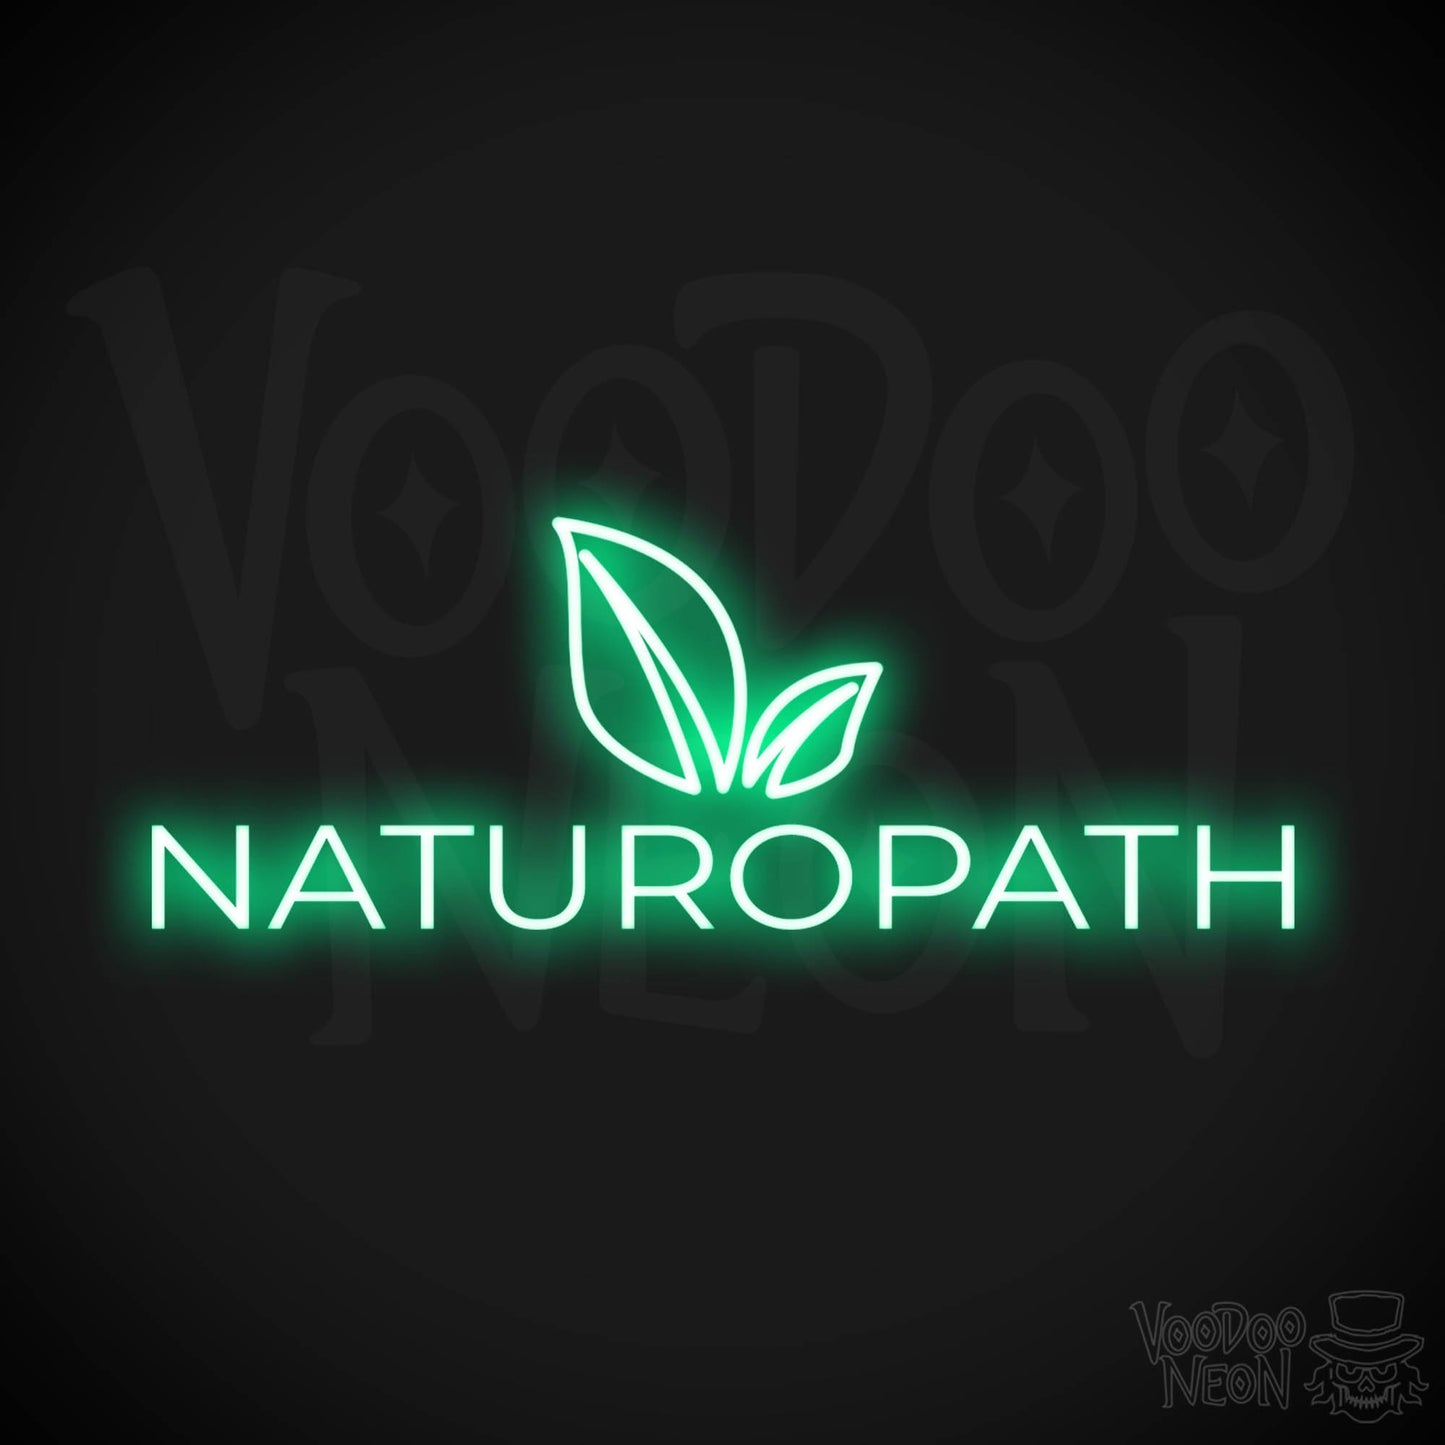 Naturopath LED Neon - Green